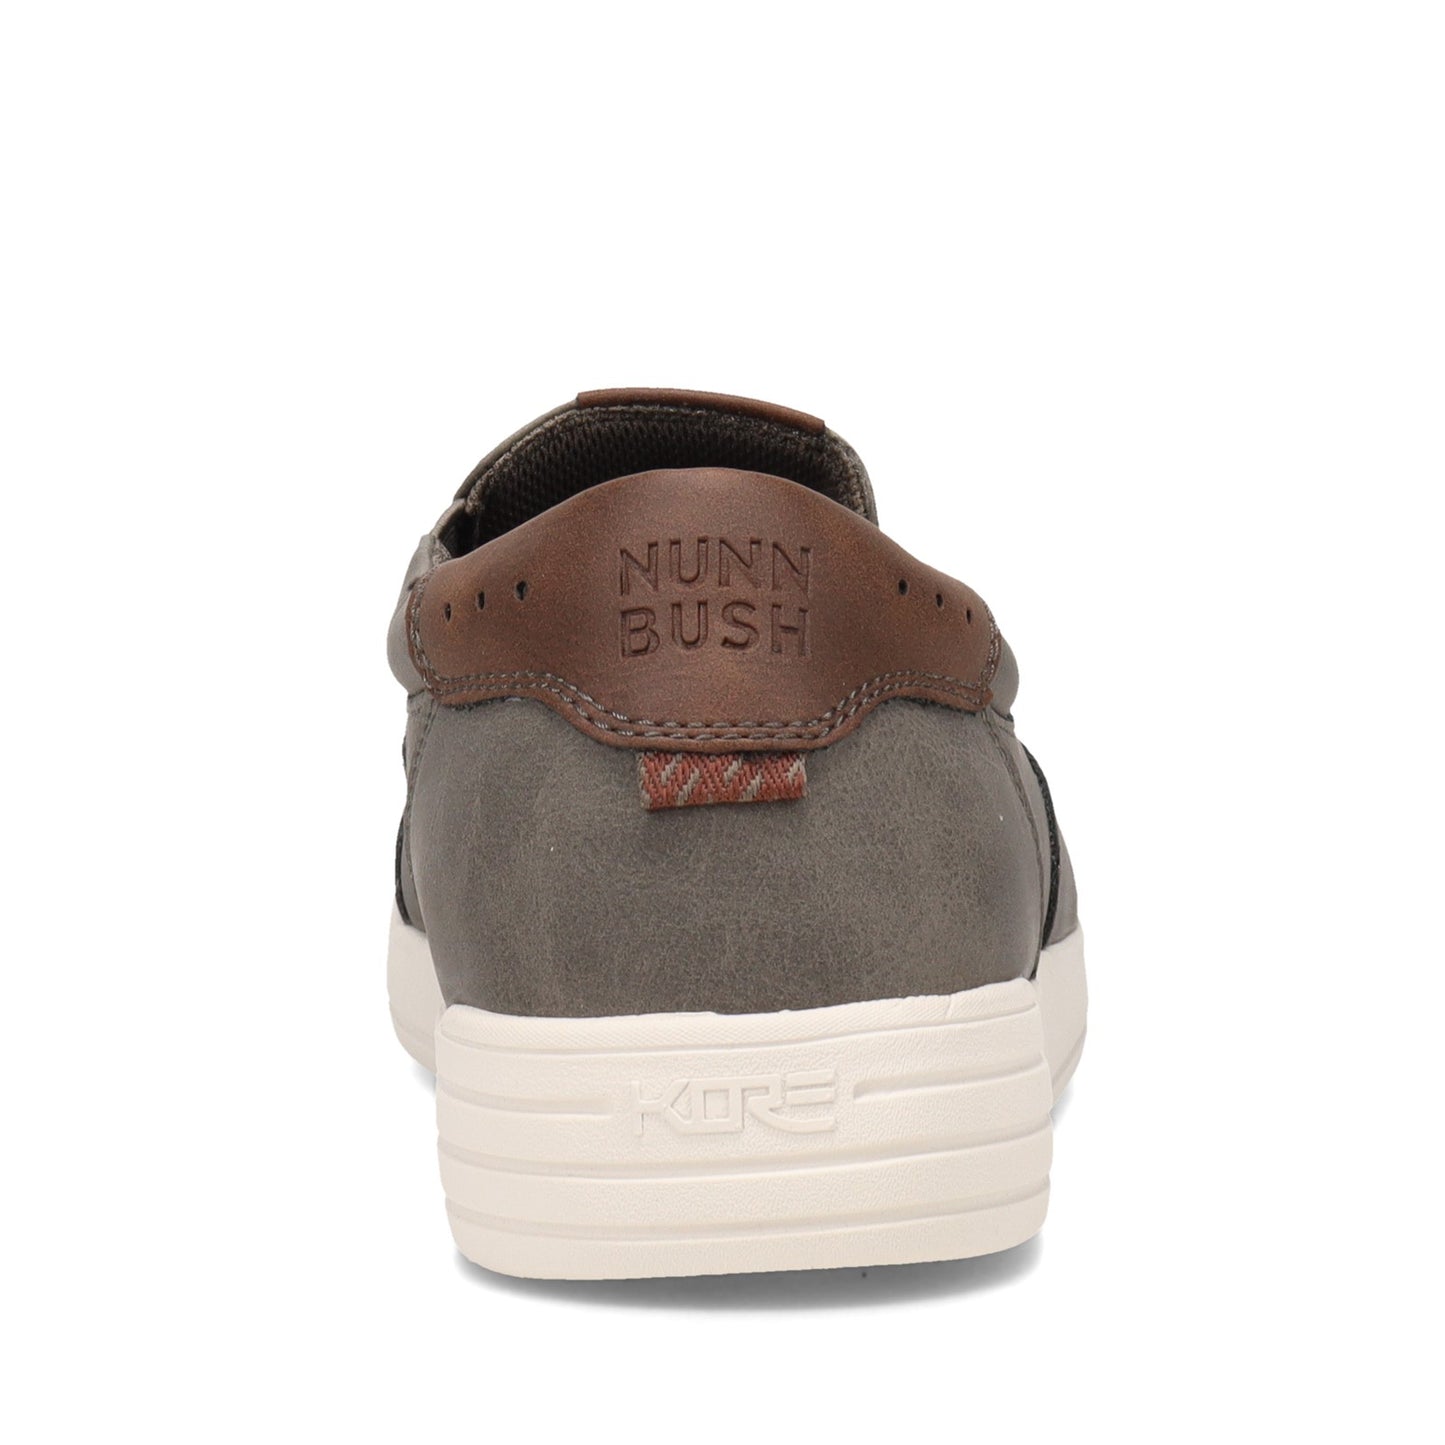 Peltz Shoes  Men's Nunn Bush Kore City Walk Slip-On Sneaker CHARCOAL 84820-013